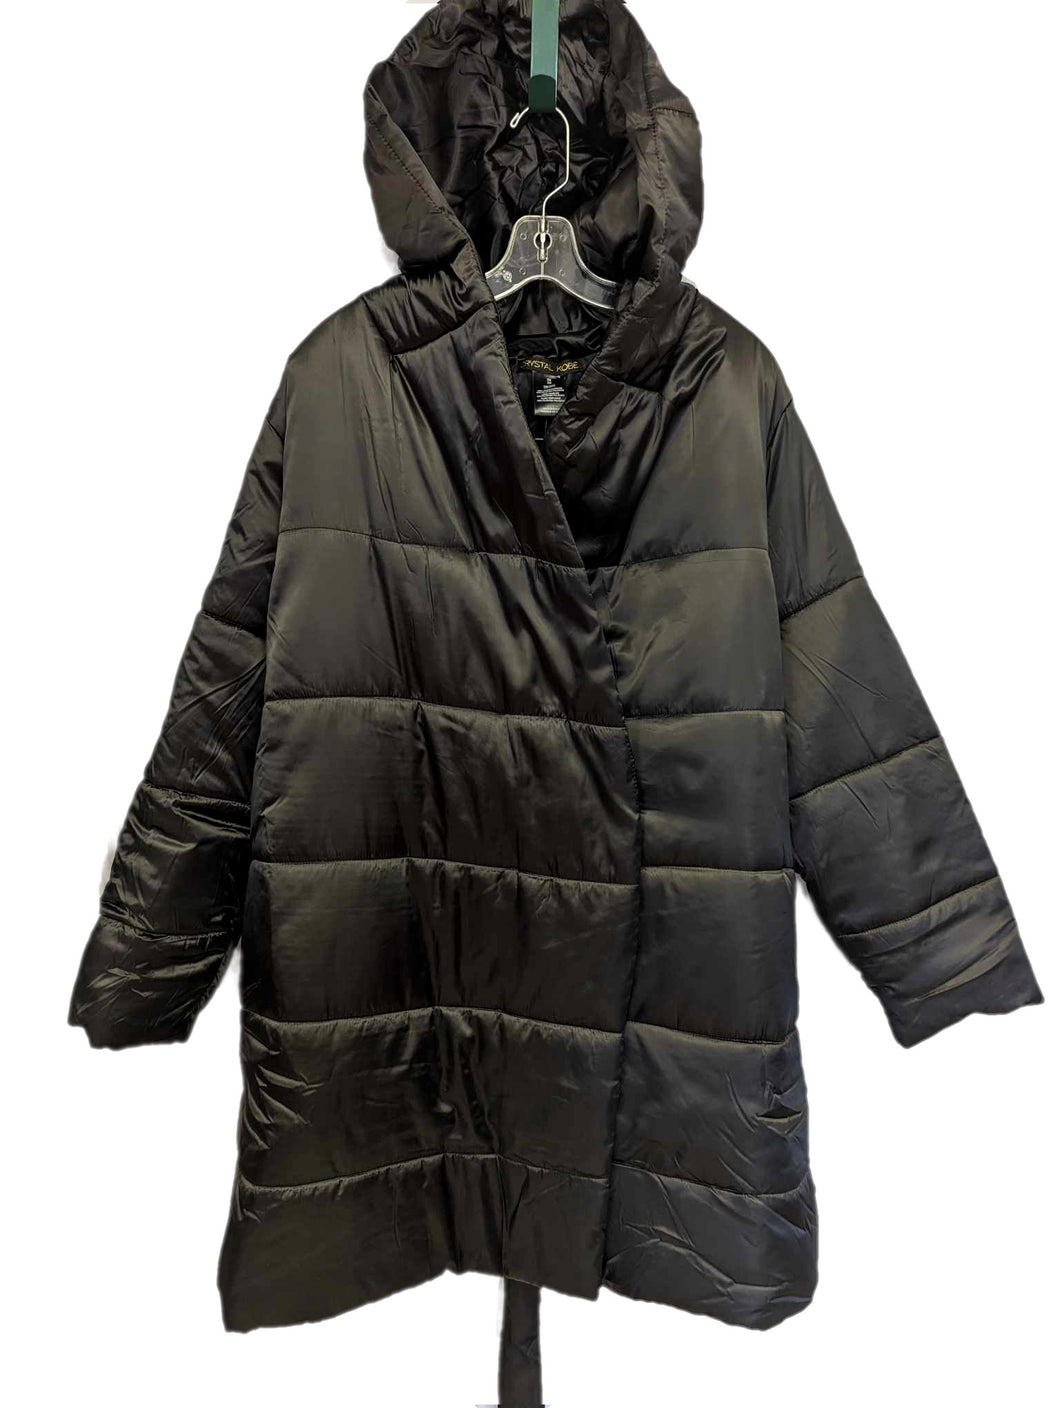 Coat - Size 3X